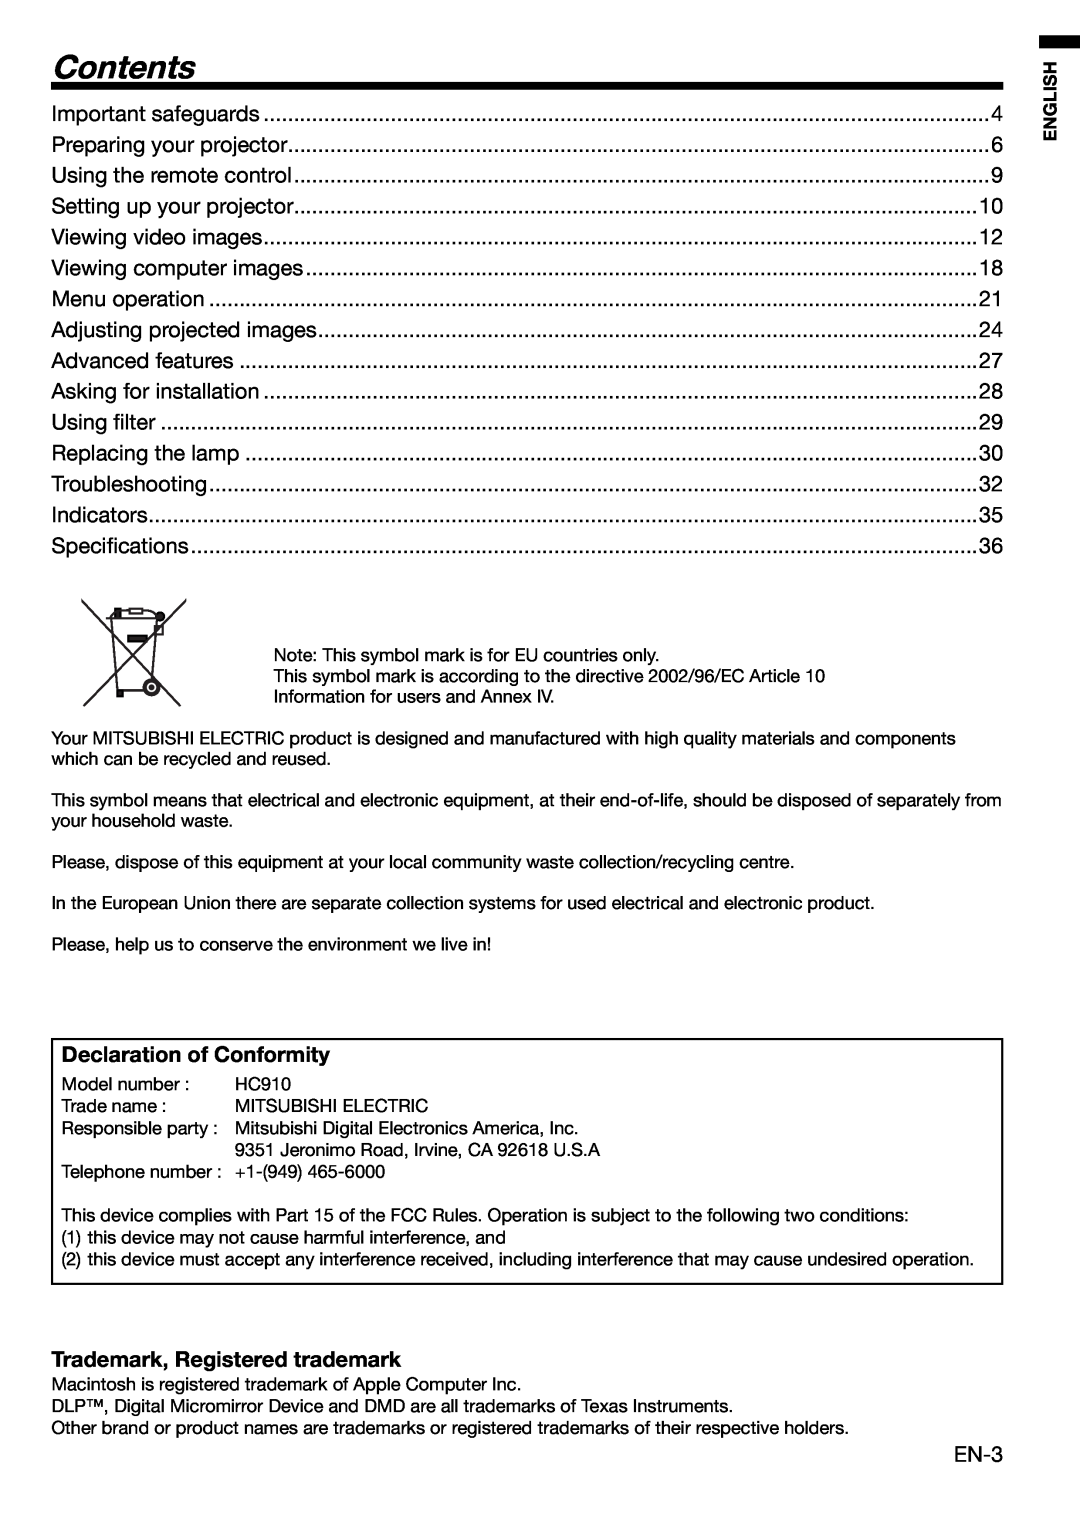 Mitsubishi Electronics HC910 user manual Contents, Declaration of Conformity, Trademark, Registered trademark 